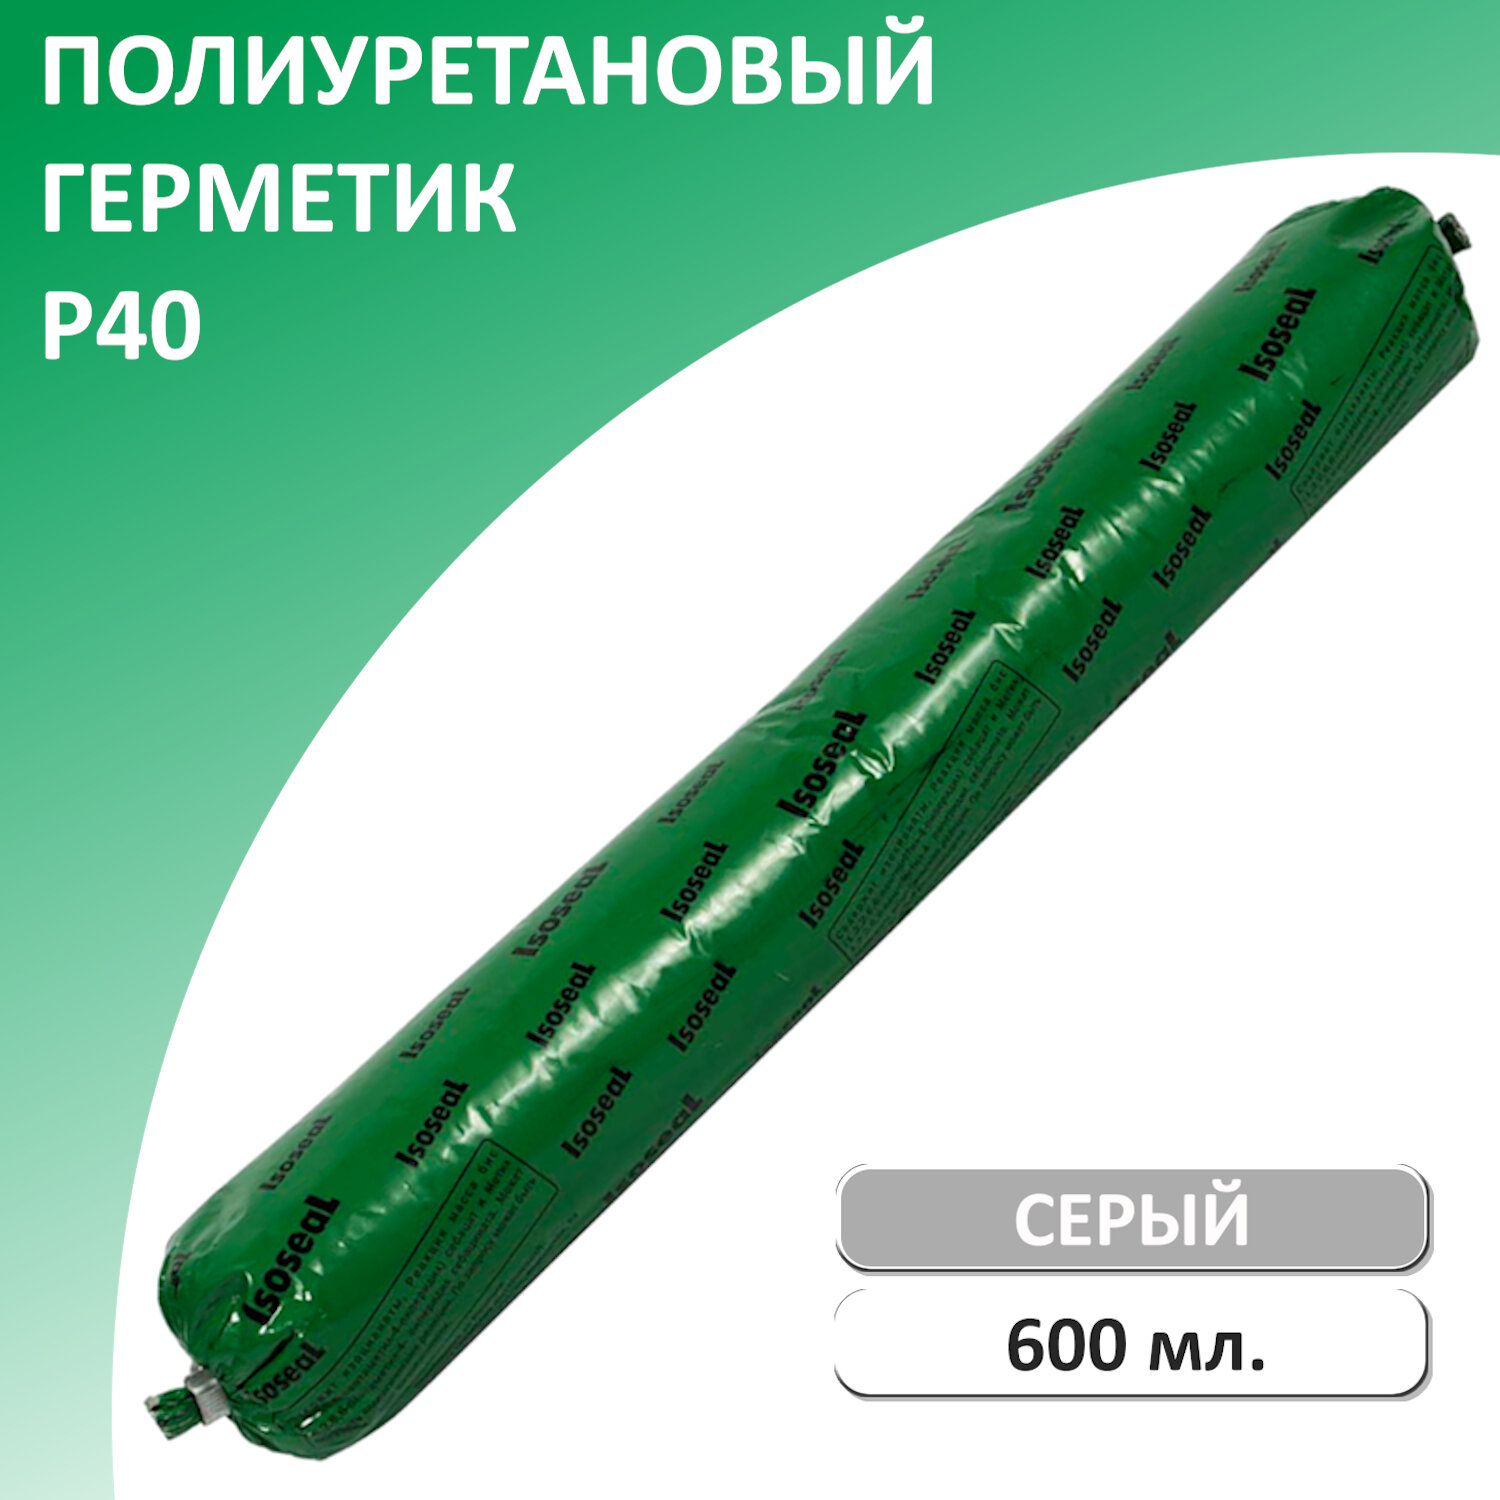 Герметик полиуретановый ISOSEAL P40 600 мл